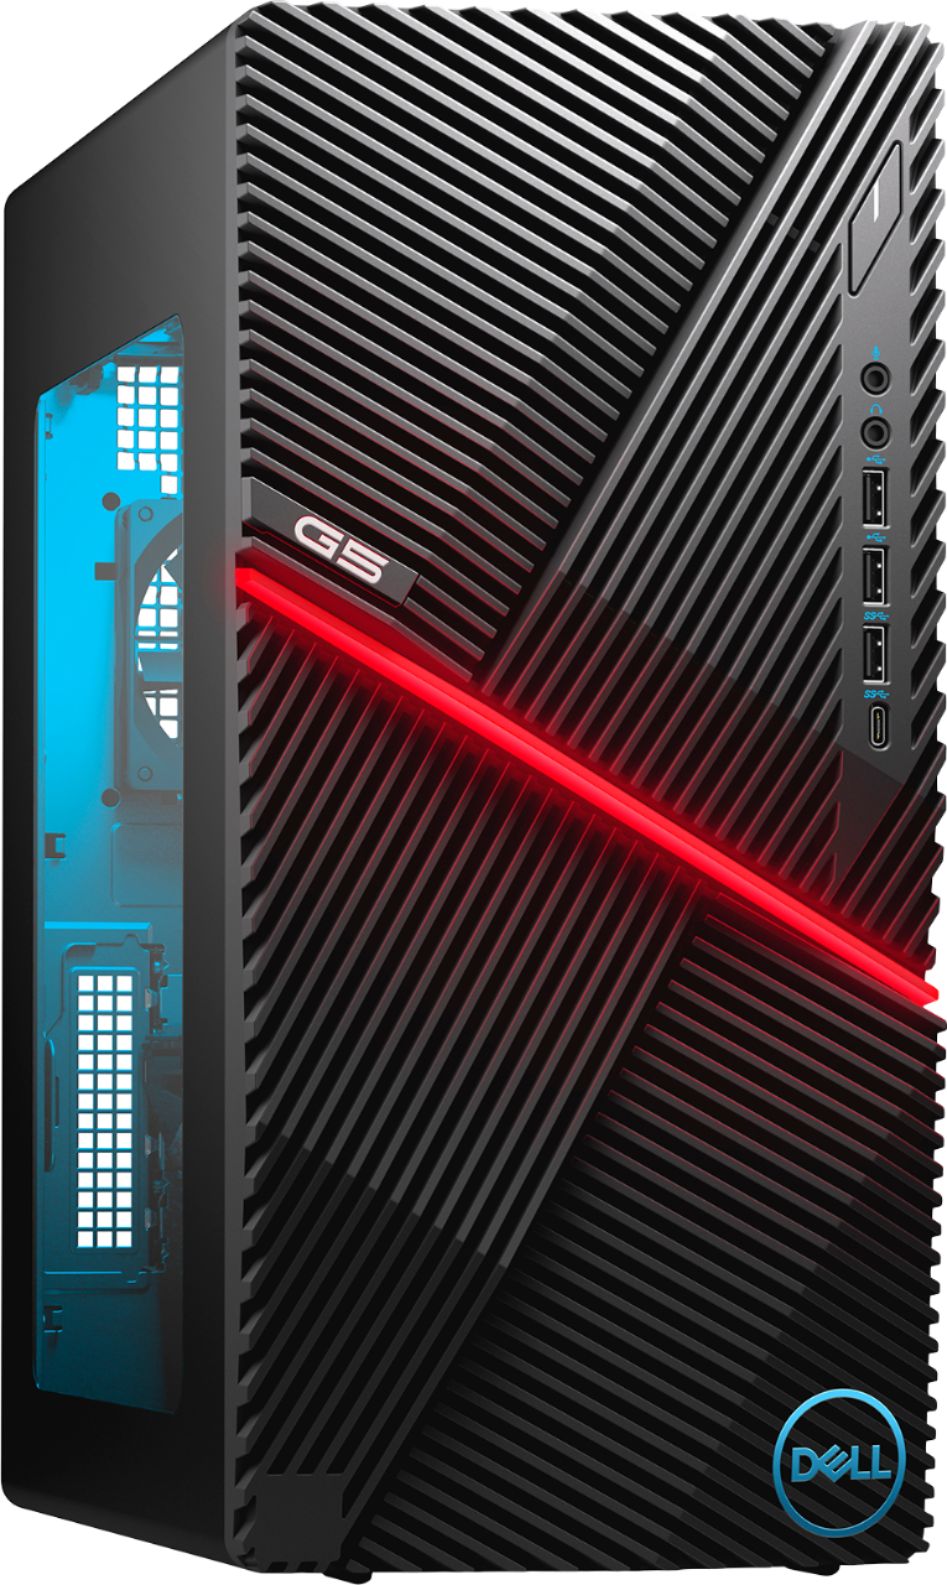 Best Buy Dell G5 Gaming Desktop Intel Core I5 f 8gb Memory Nvidia Geforce Gtx 1660 Super 1tb Hdd 256gb Ssd Black Clear Side Panel I5000 5378blk Pus